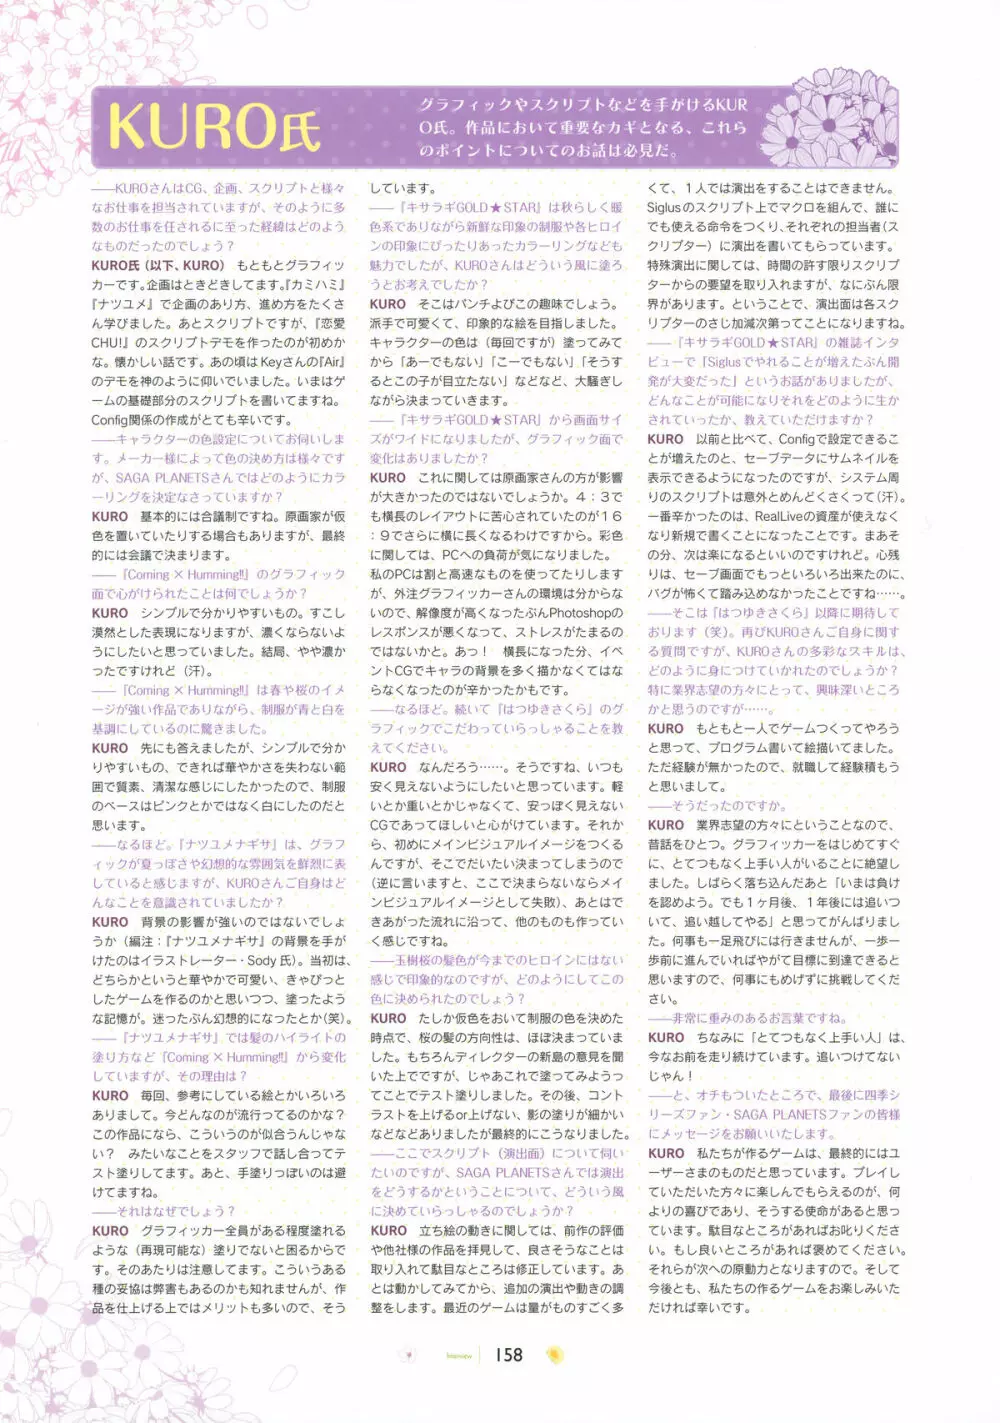 SAGA PLANETS 四季シリーズ All Season Art Works 159ページ